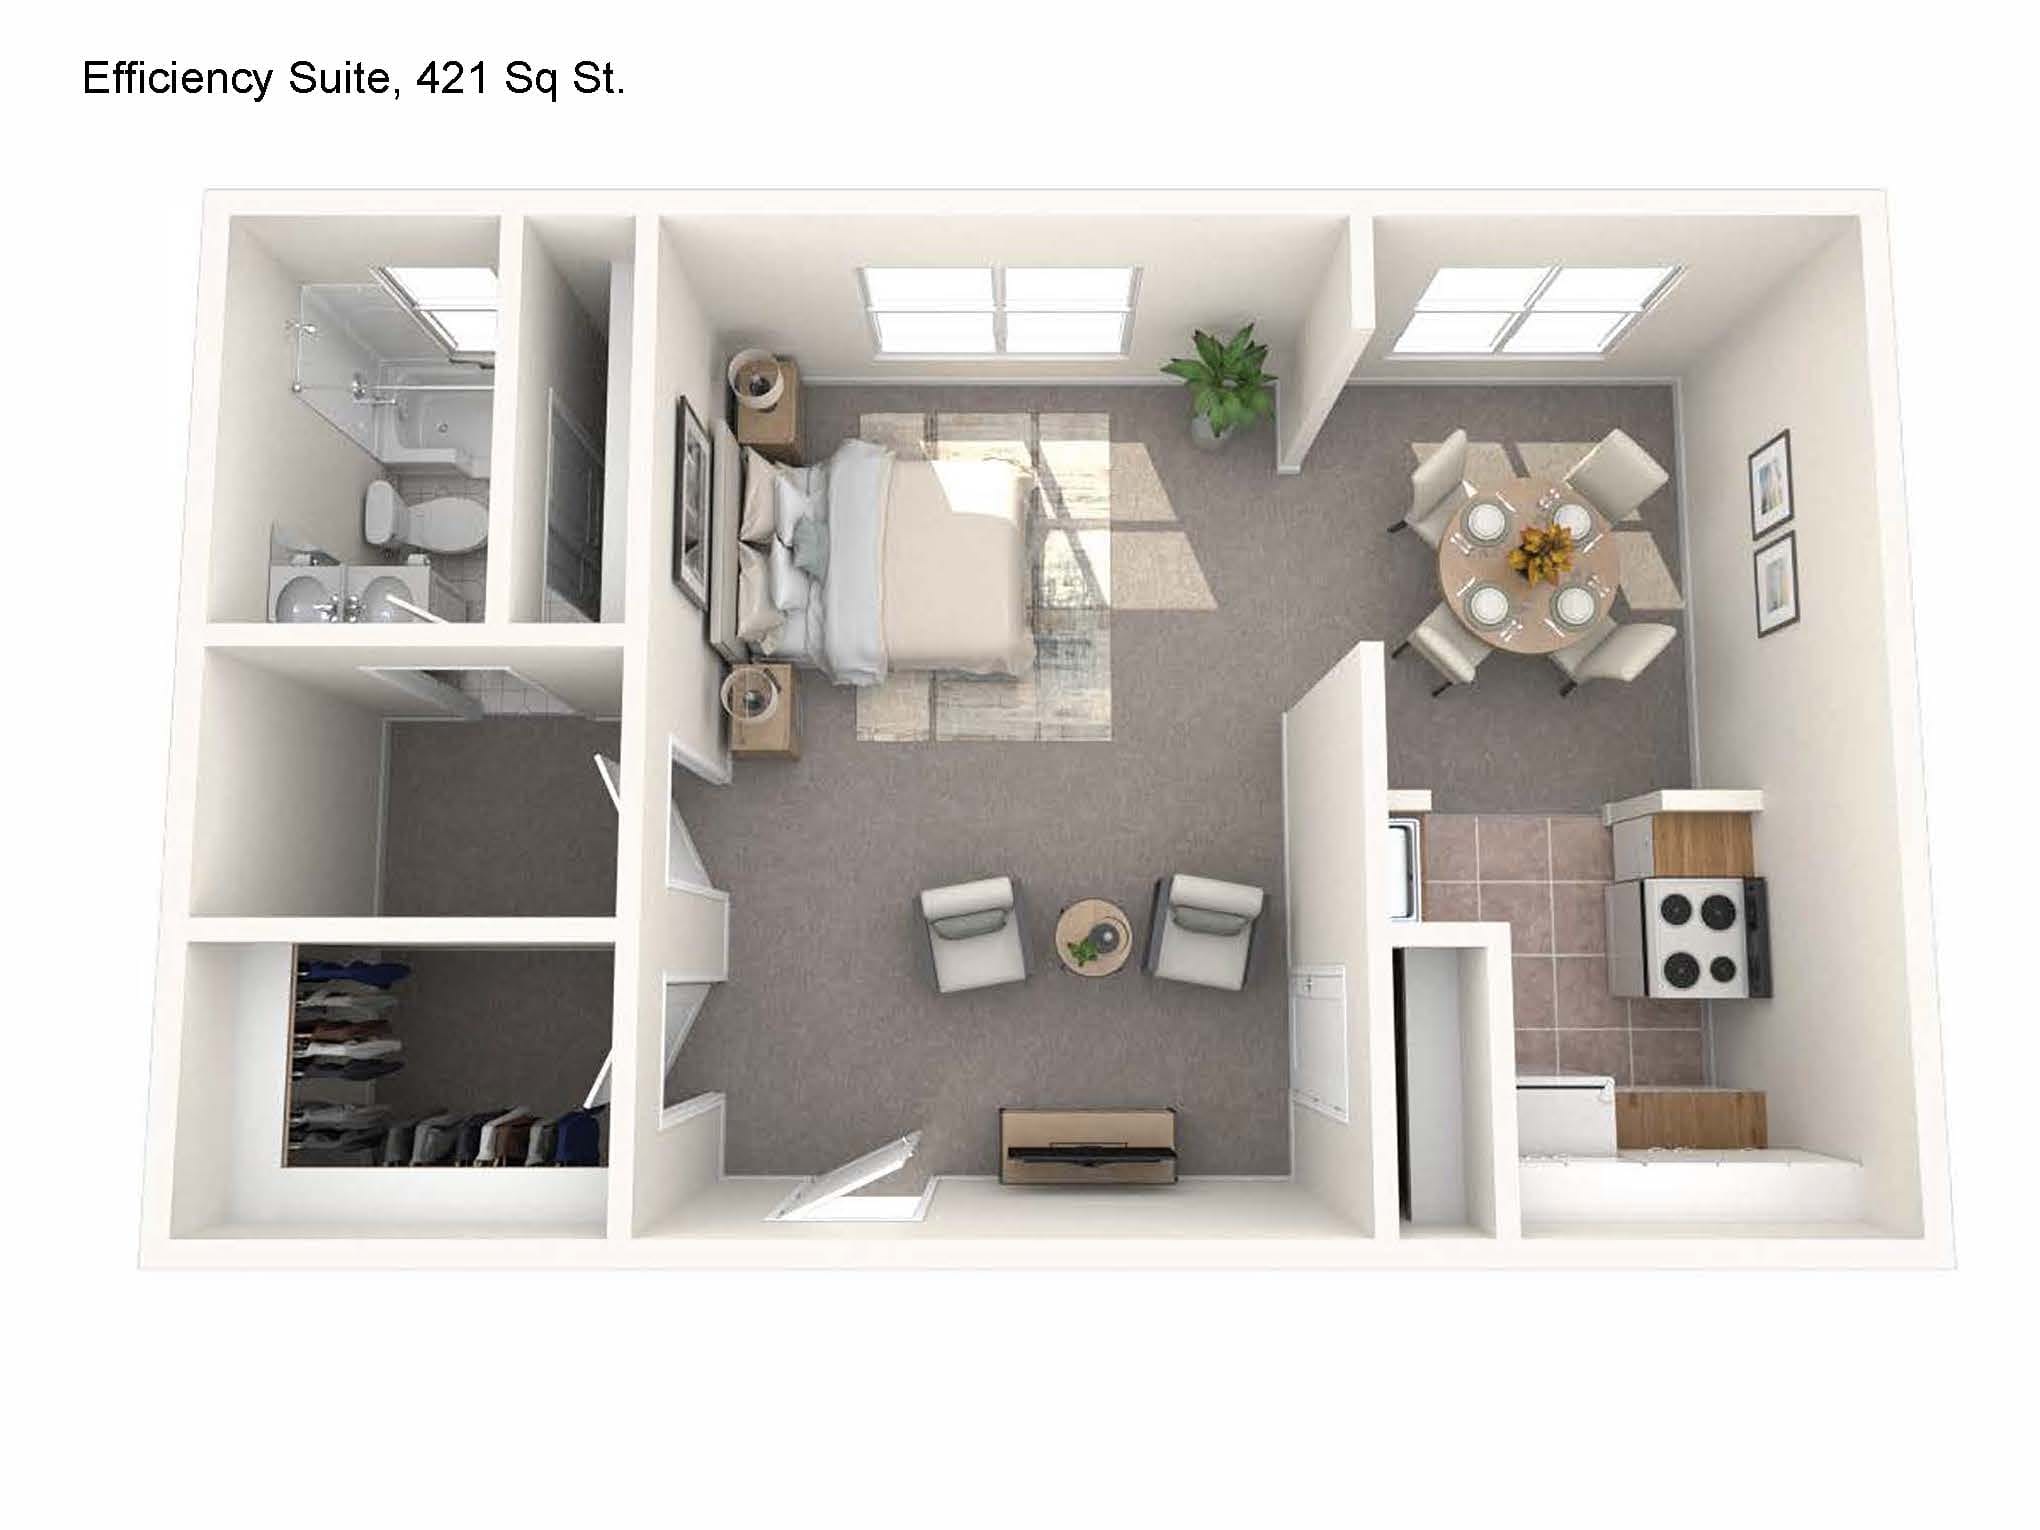 Tower Grove Manor Efficiency Suite floor plan